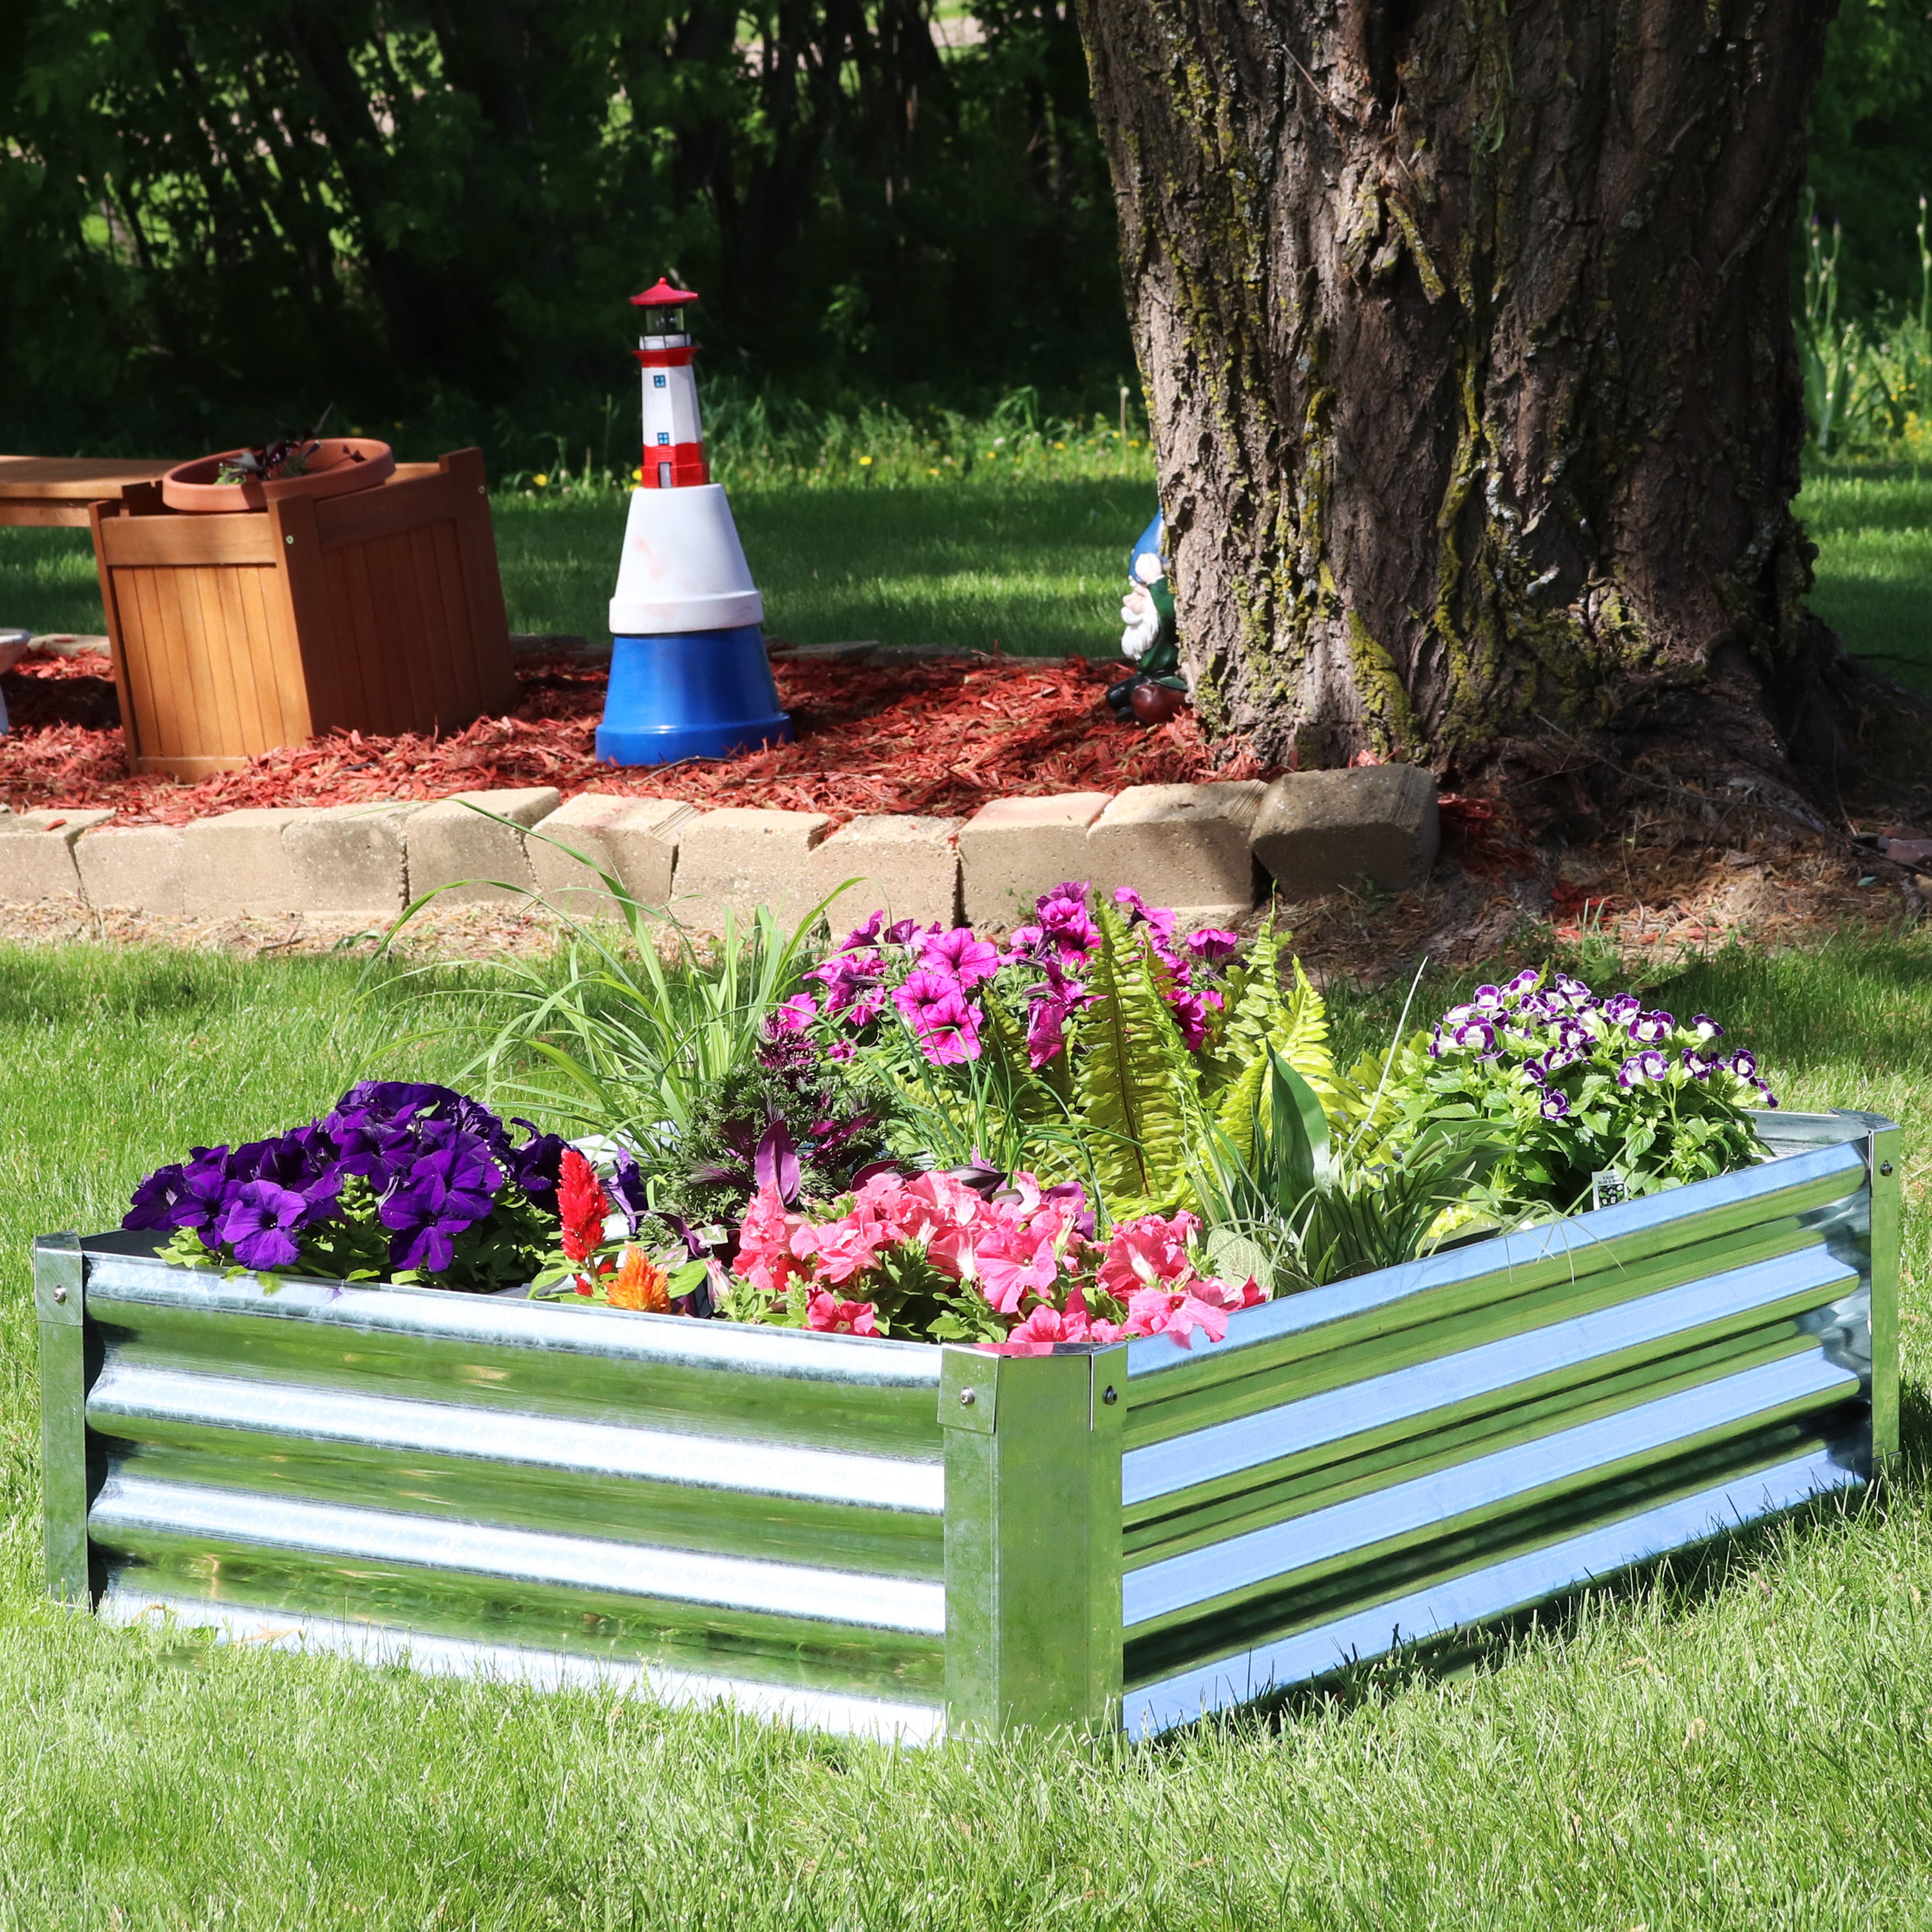 Blue Metal Raised Garden Beds for Vegetables Outdoor Planter Box Galvanized Steel Gardening Flower Bed Kits 4x3x1 Ft 